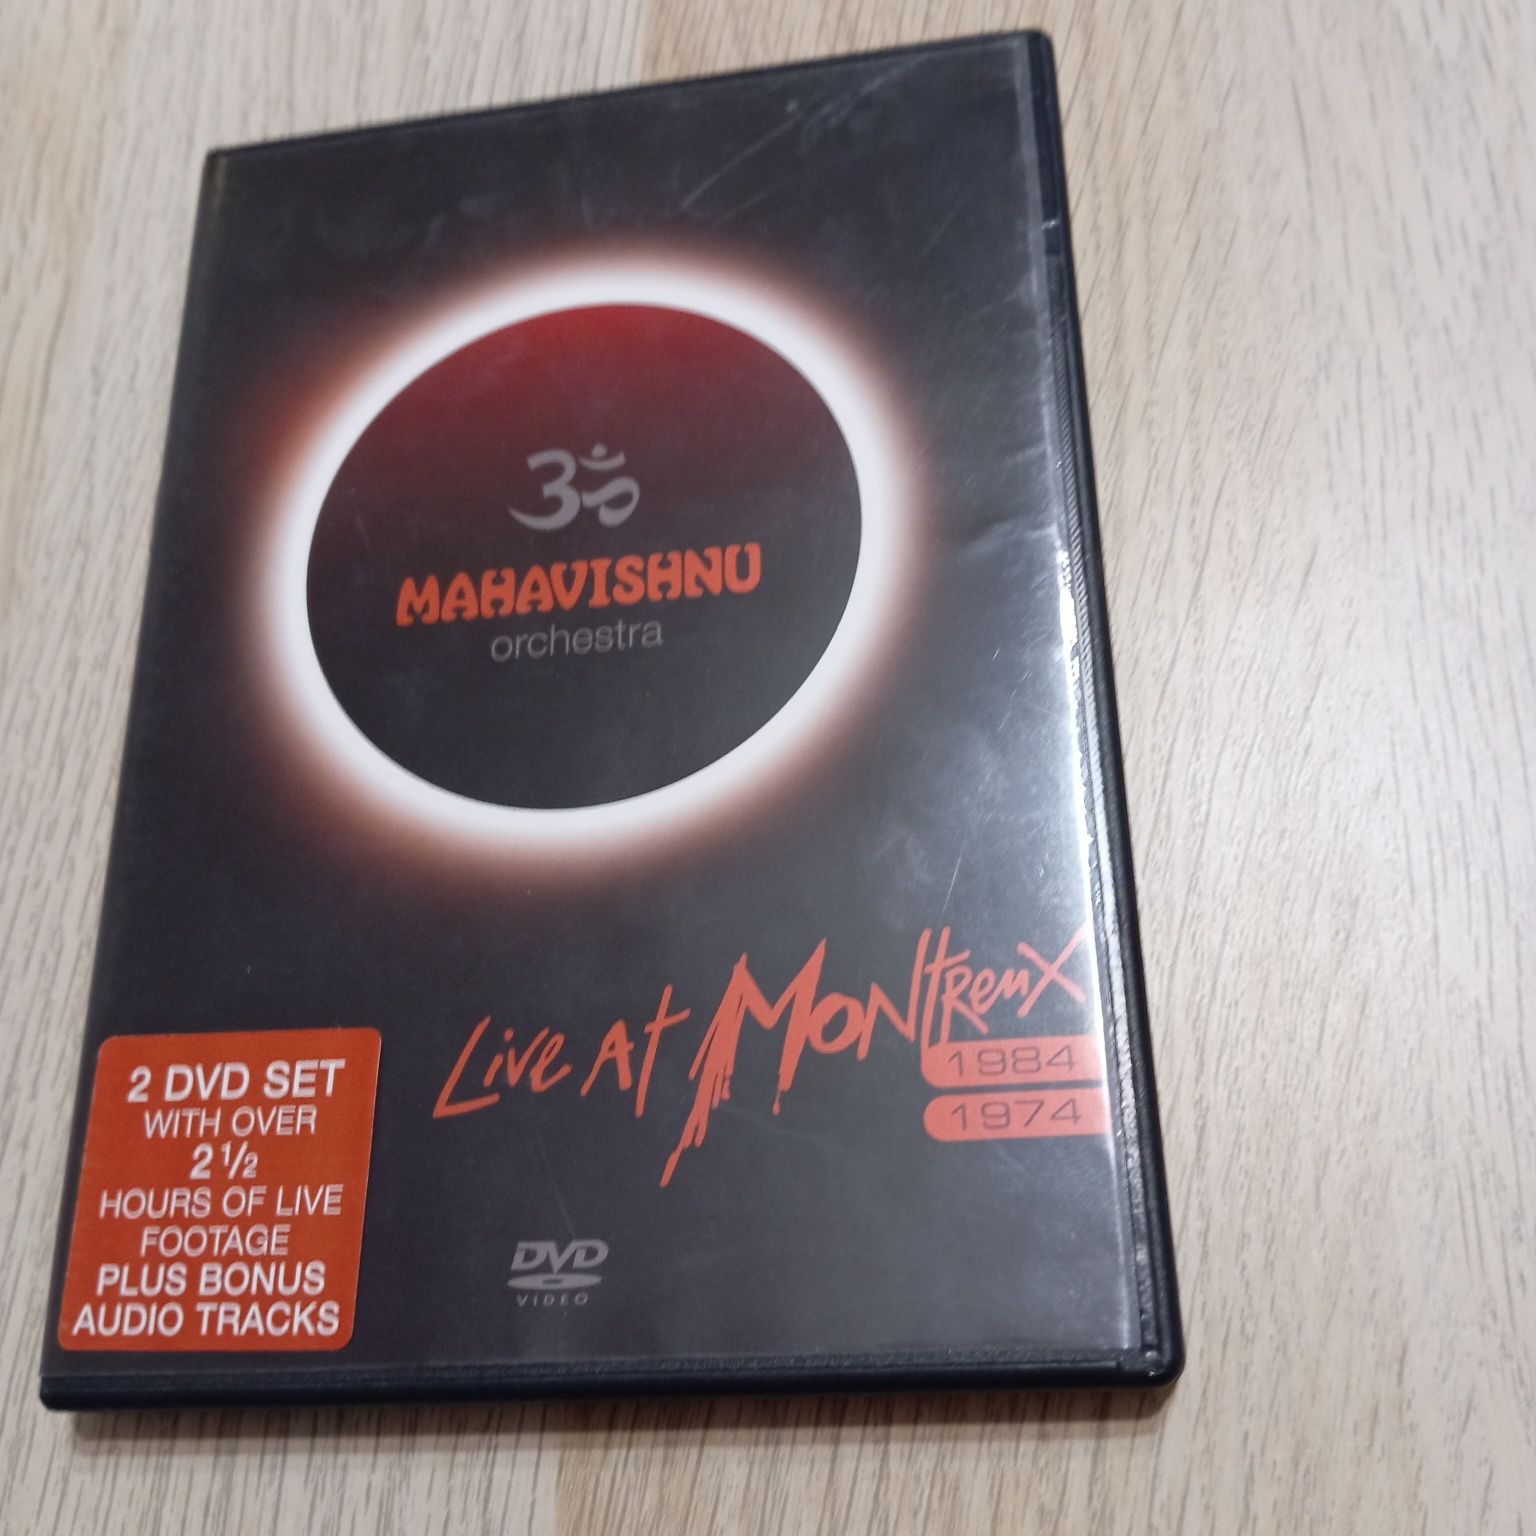 Mahavishnu Orchestra "Live et Montreux 1984, 1974" DVD unikat